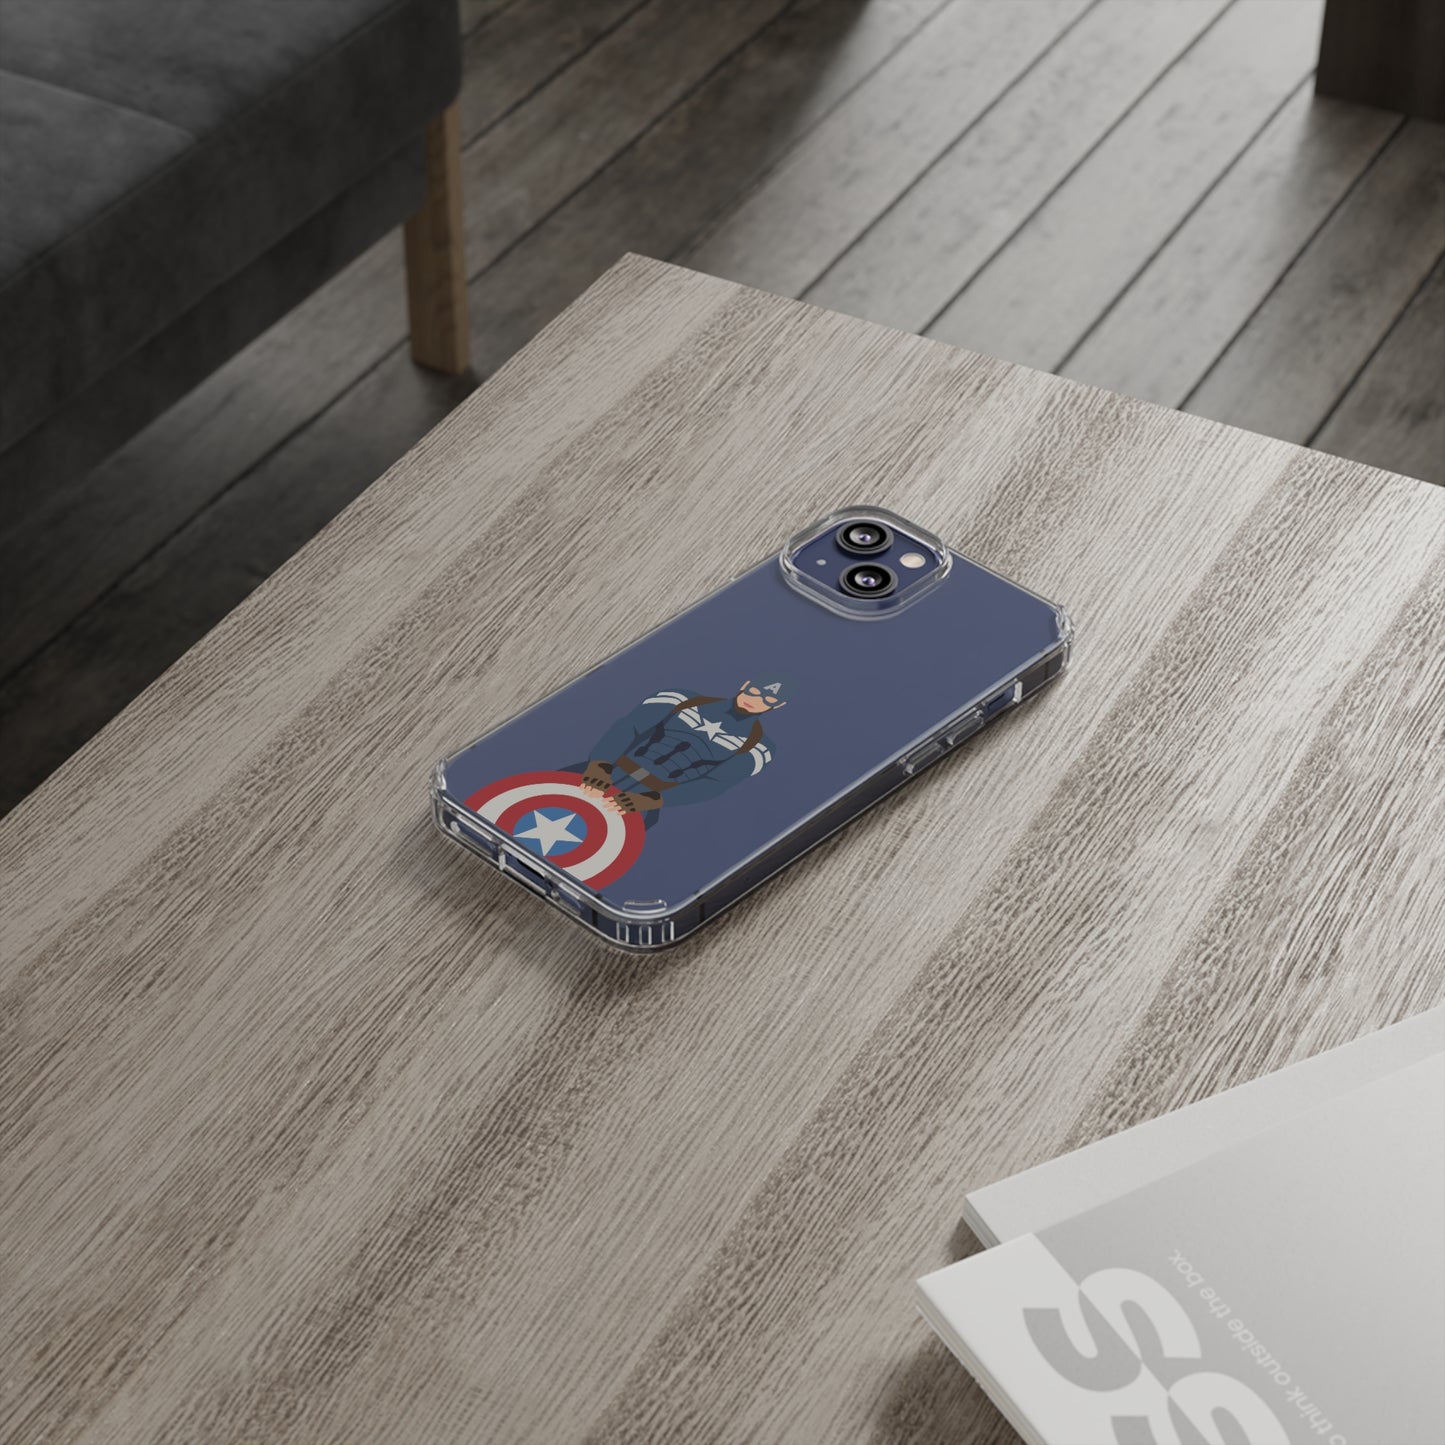 Coque de téléphone transparente Captain America